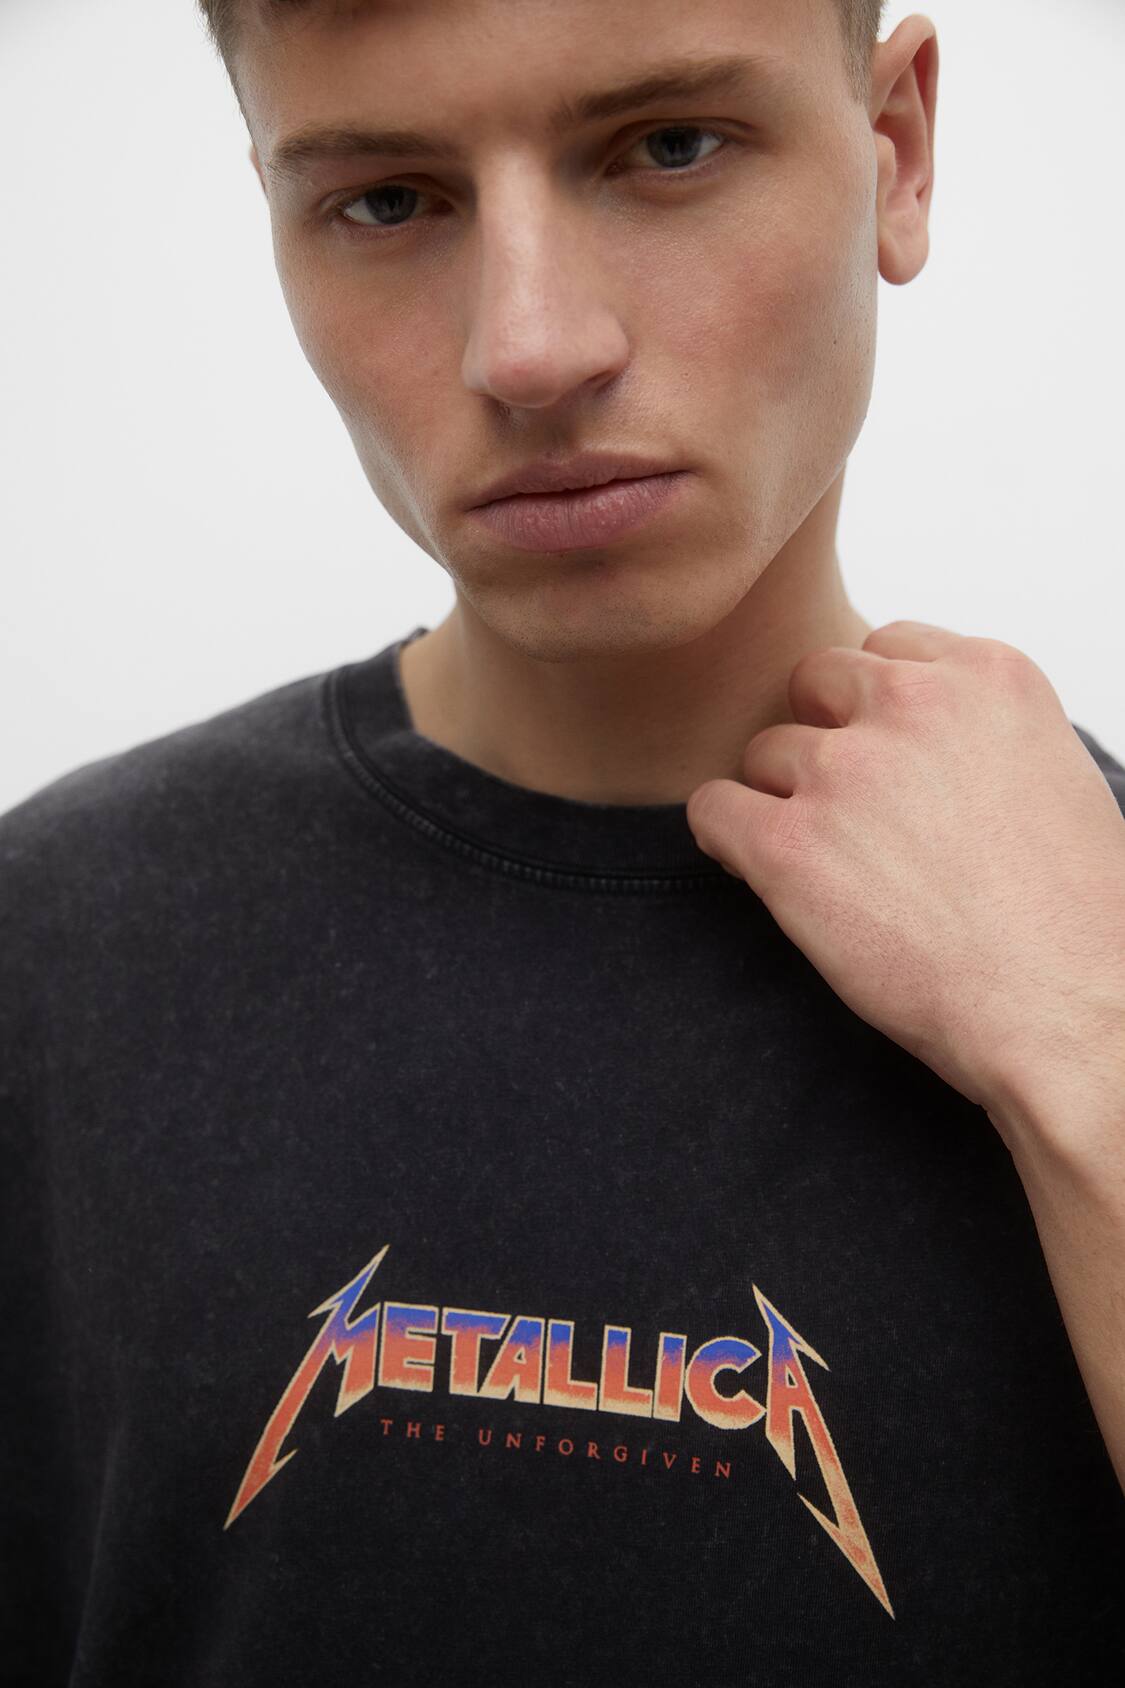 Faded Metallica T-shirt - pull&bear